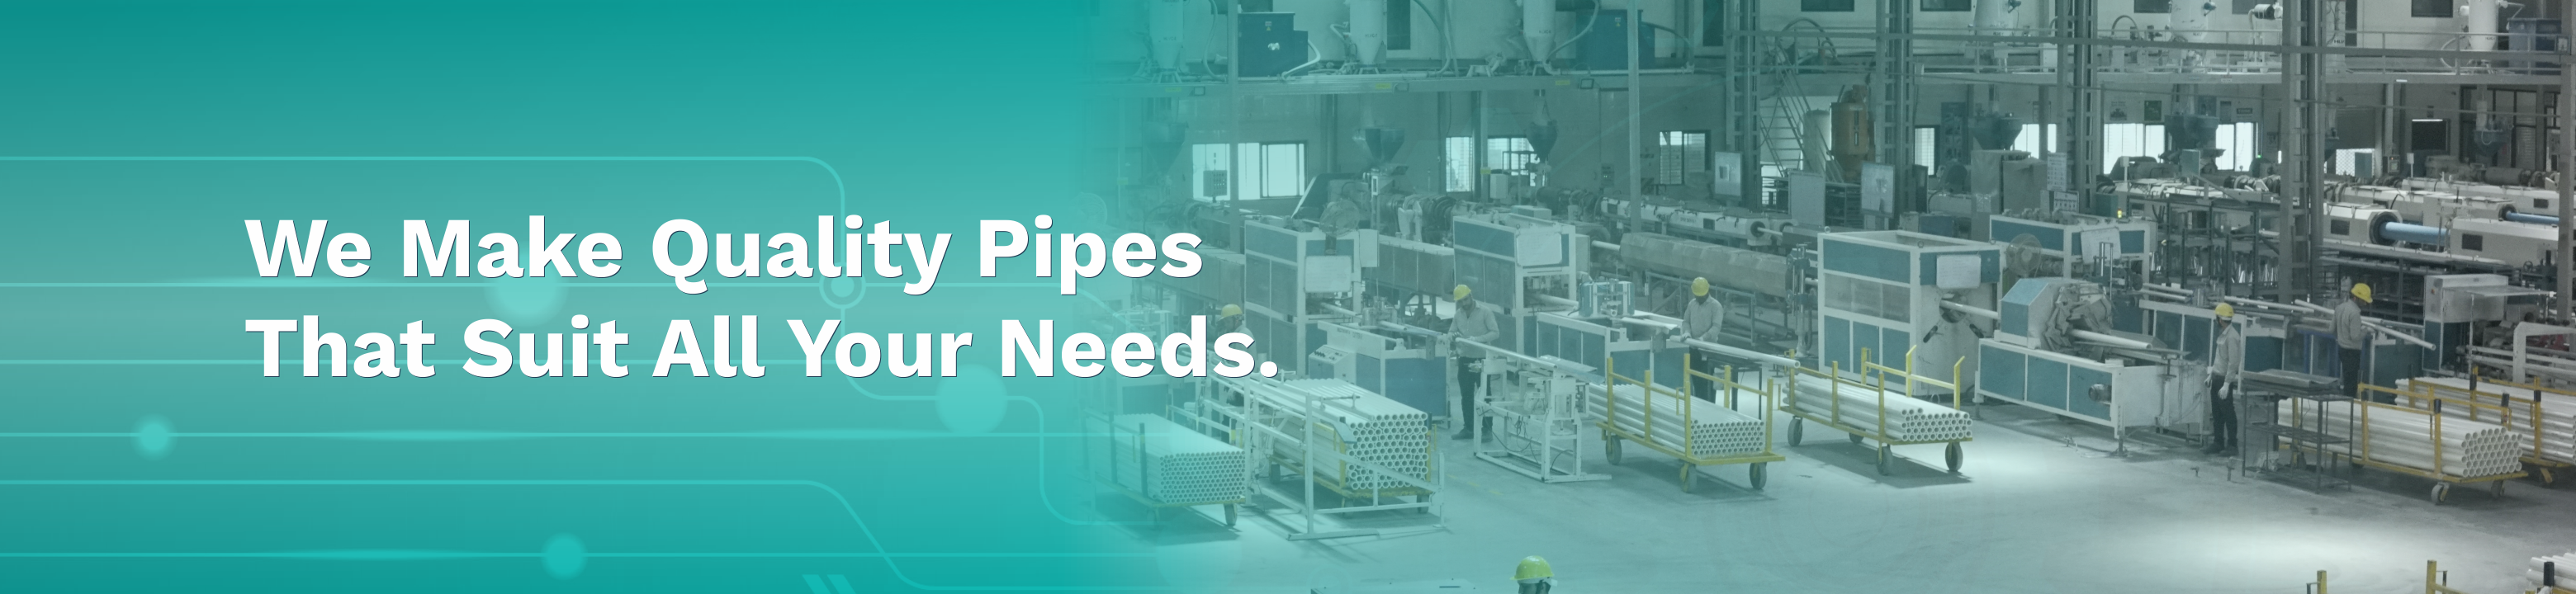 DukePipes uPVC pipes manufacturers company India